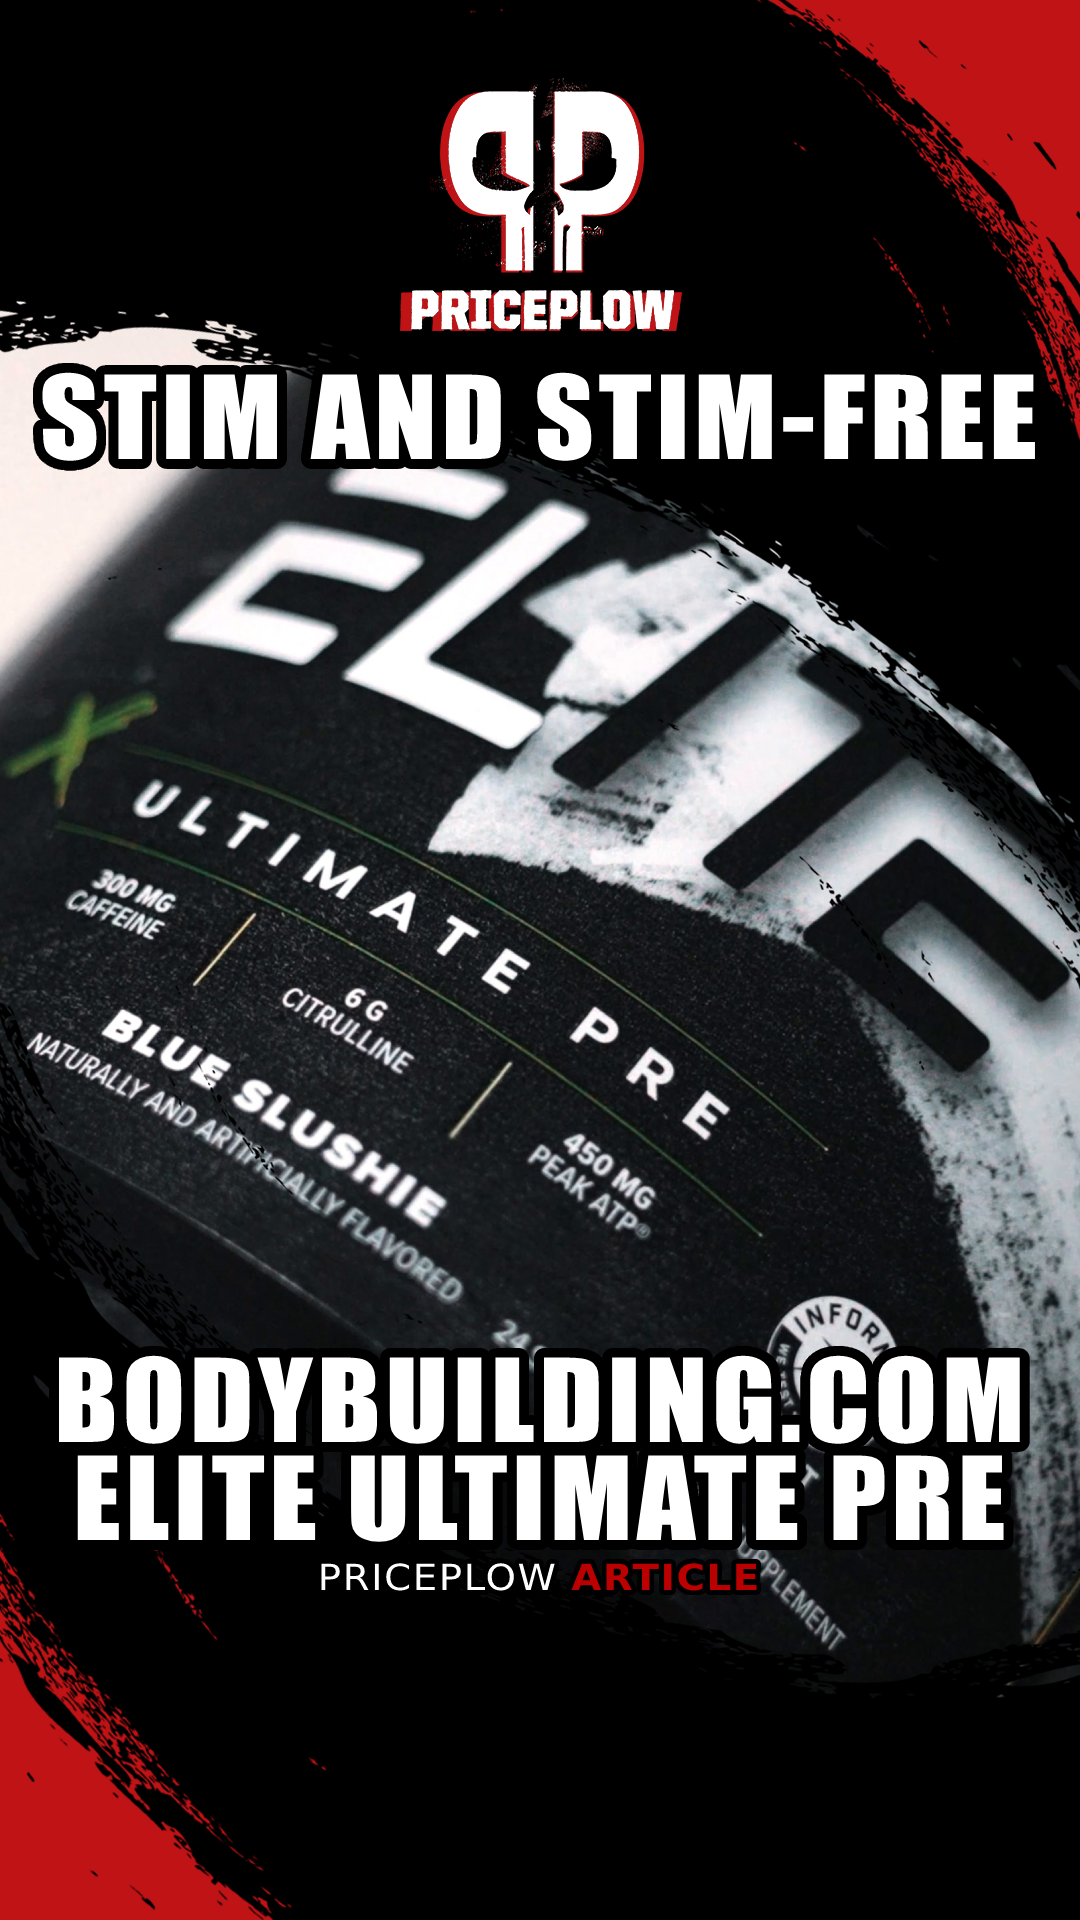 Bodybuilding.com Elite Ultimate Pre